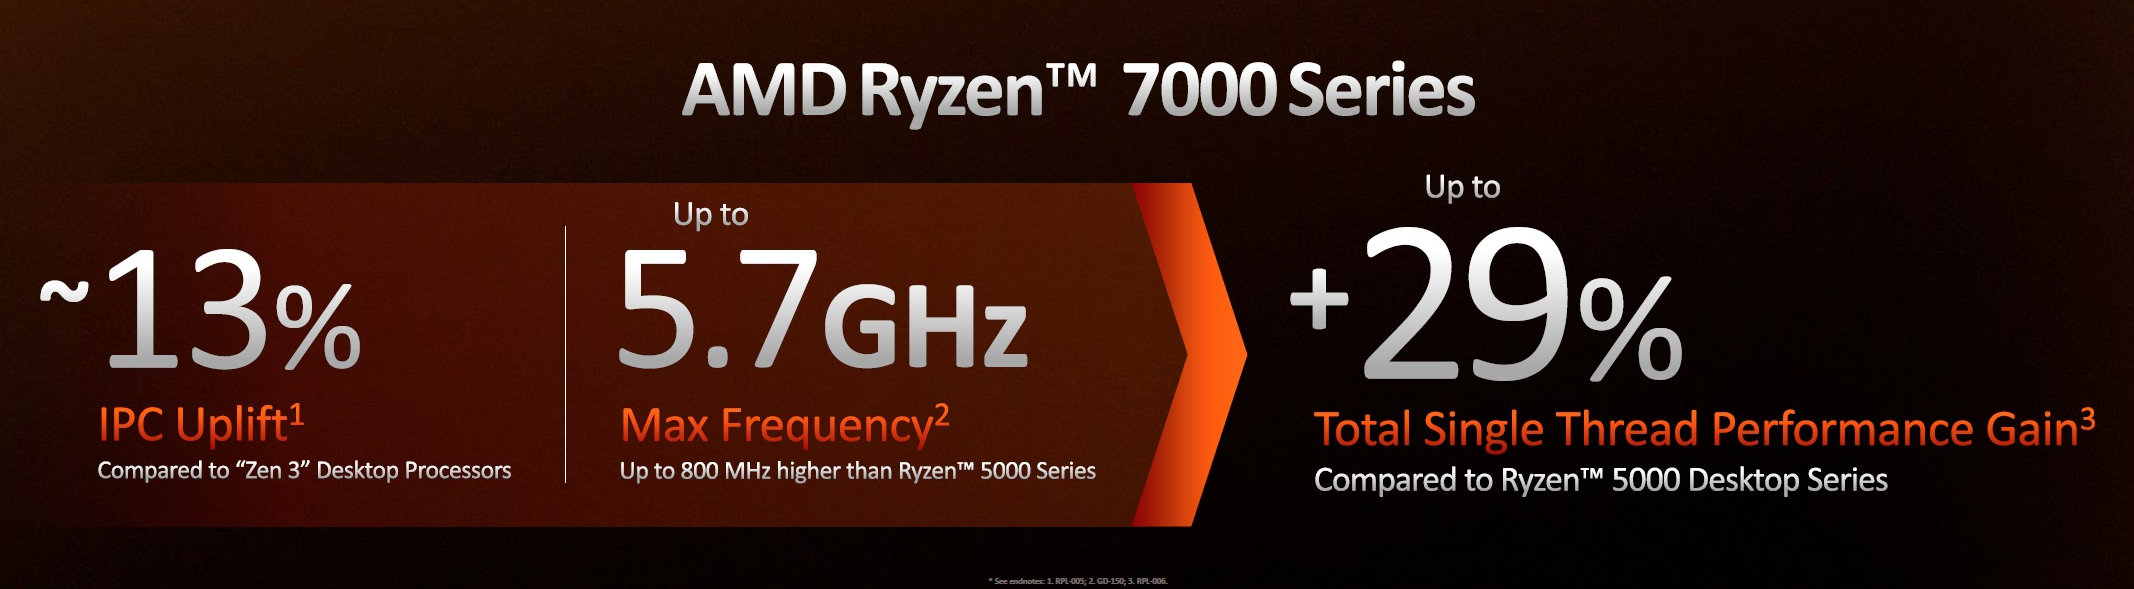 AMD Ryzen 7000 Performance